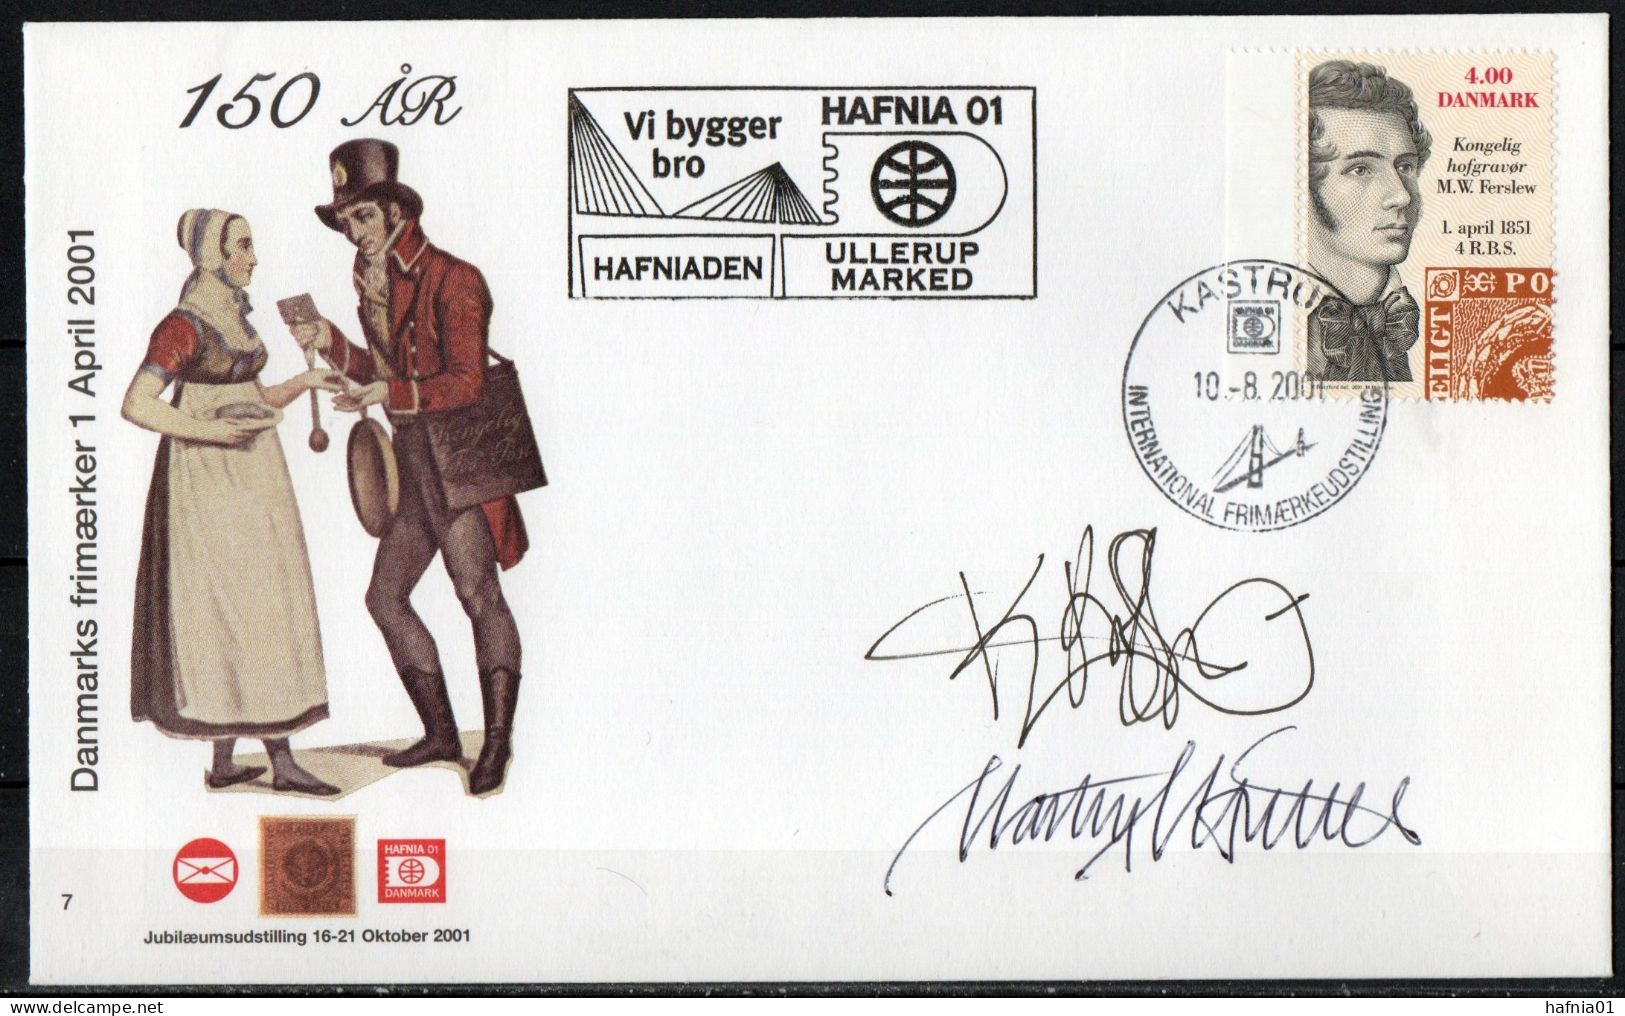 Martin Mörck. Denmark 2001. 150 Anniv Danish Stamps. Michel 1273 On Cover. Special Cancel, Rare Cachet. Signed. - Storia Postale